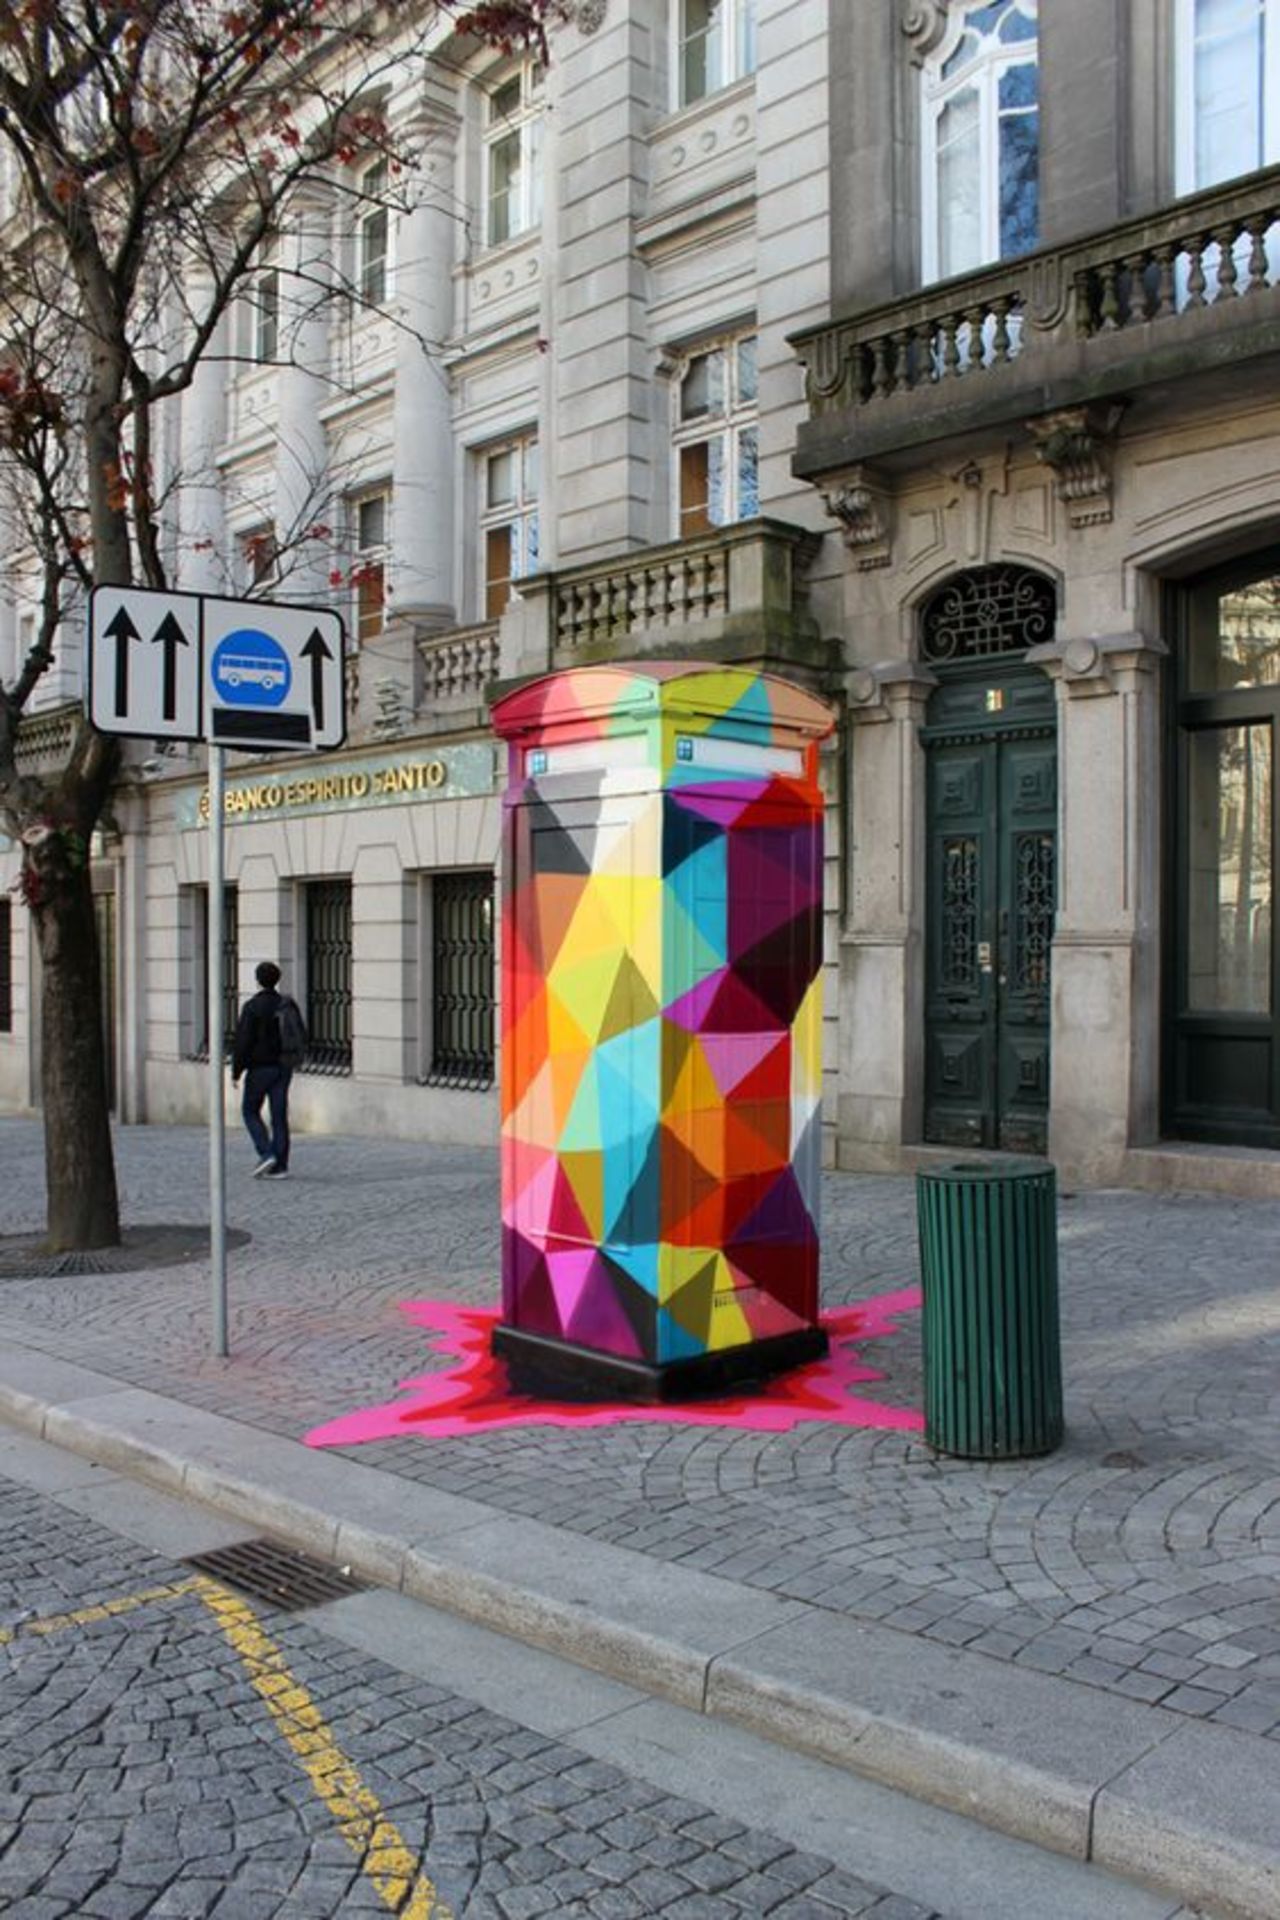 StreetArtepics: Colorful Geometric Street Art https://t.co/CnwNRemFBv #streetart #mural #graffiti #art